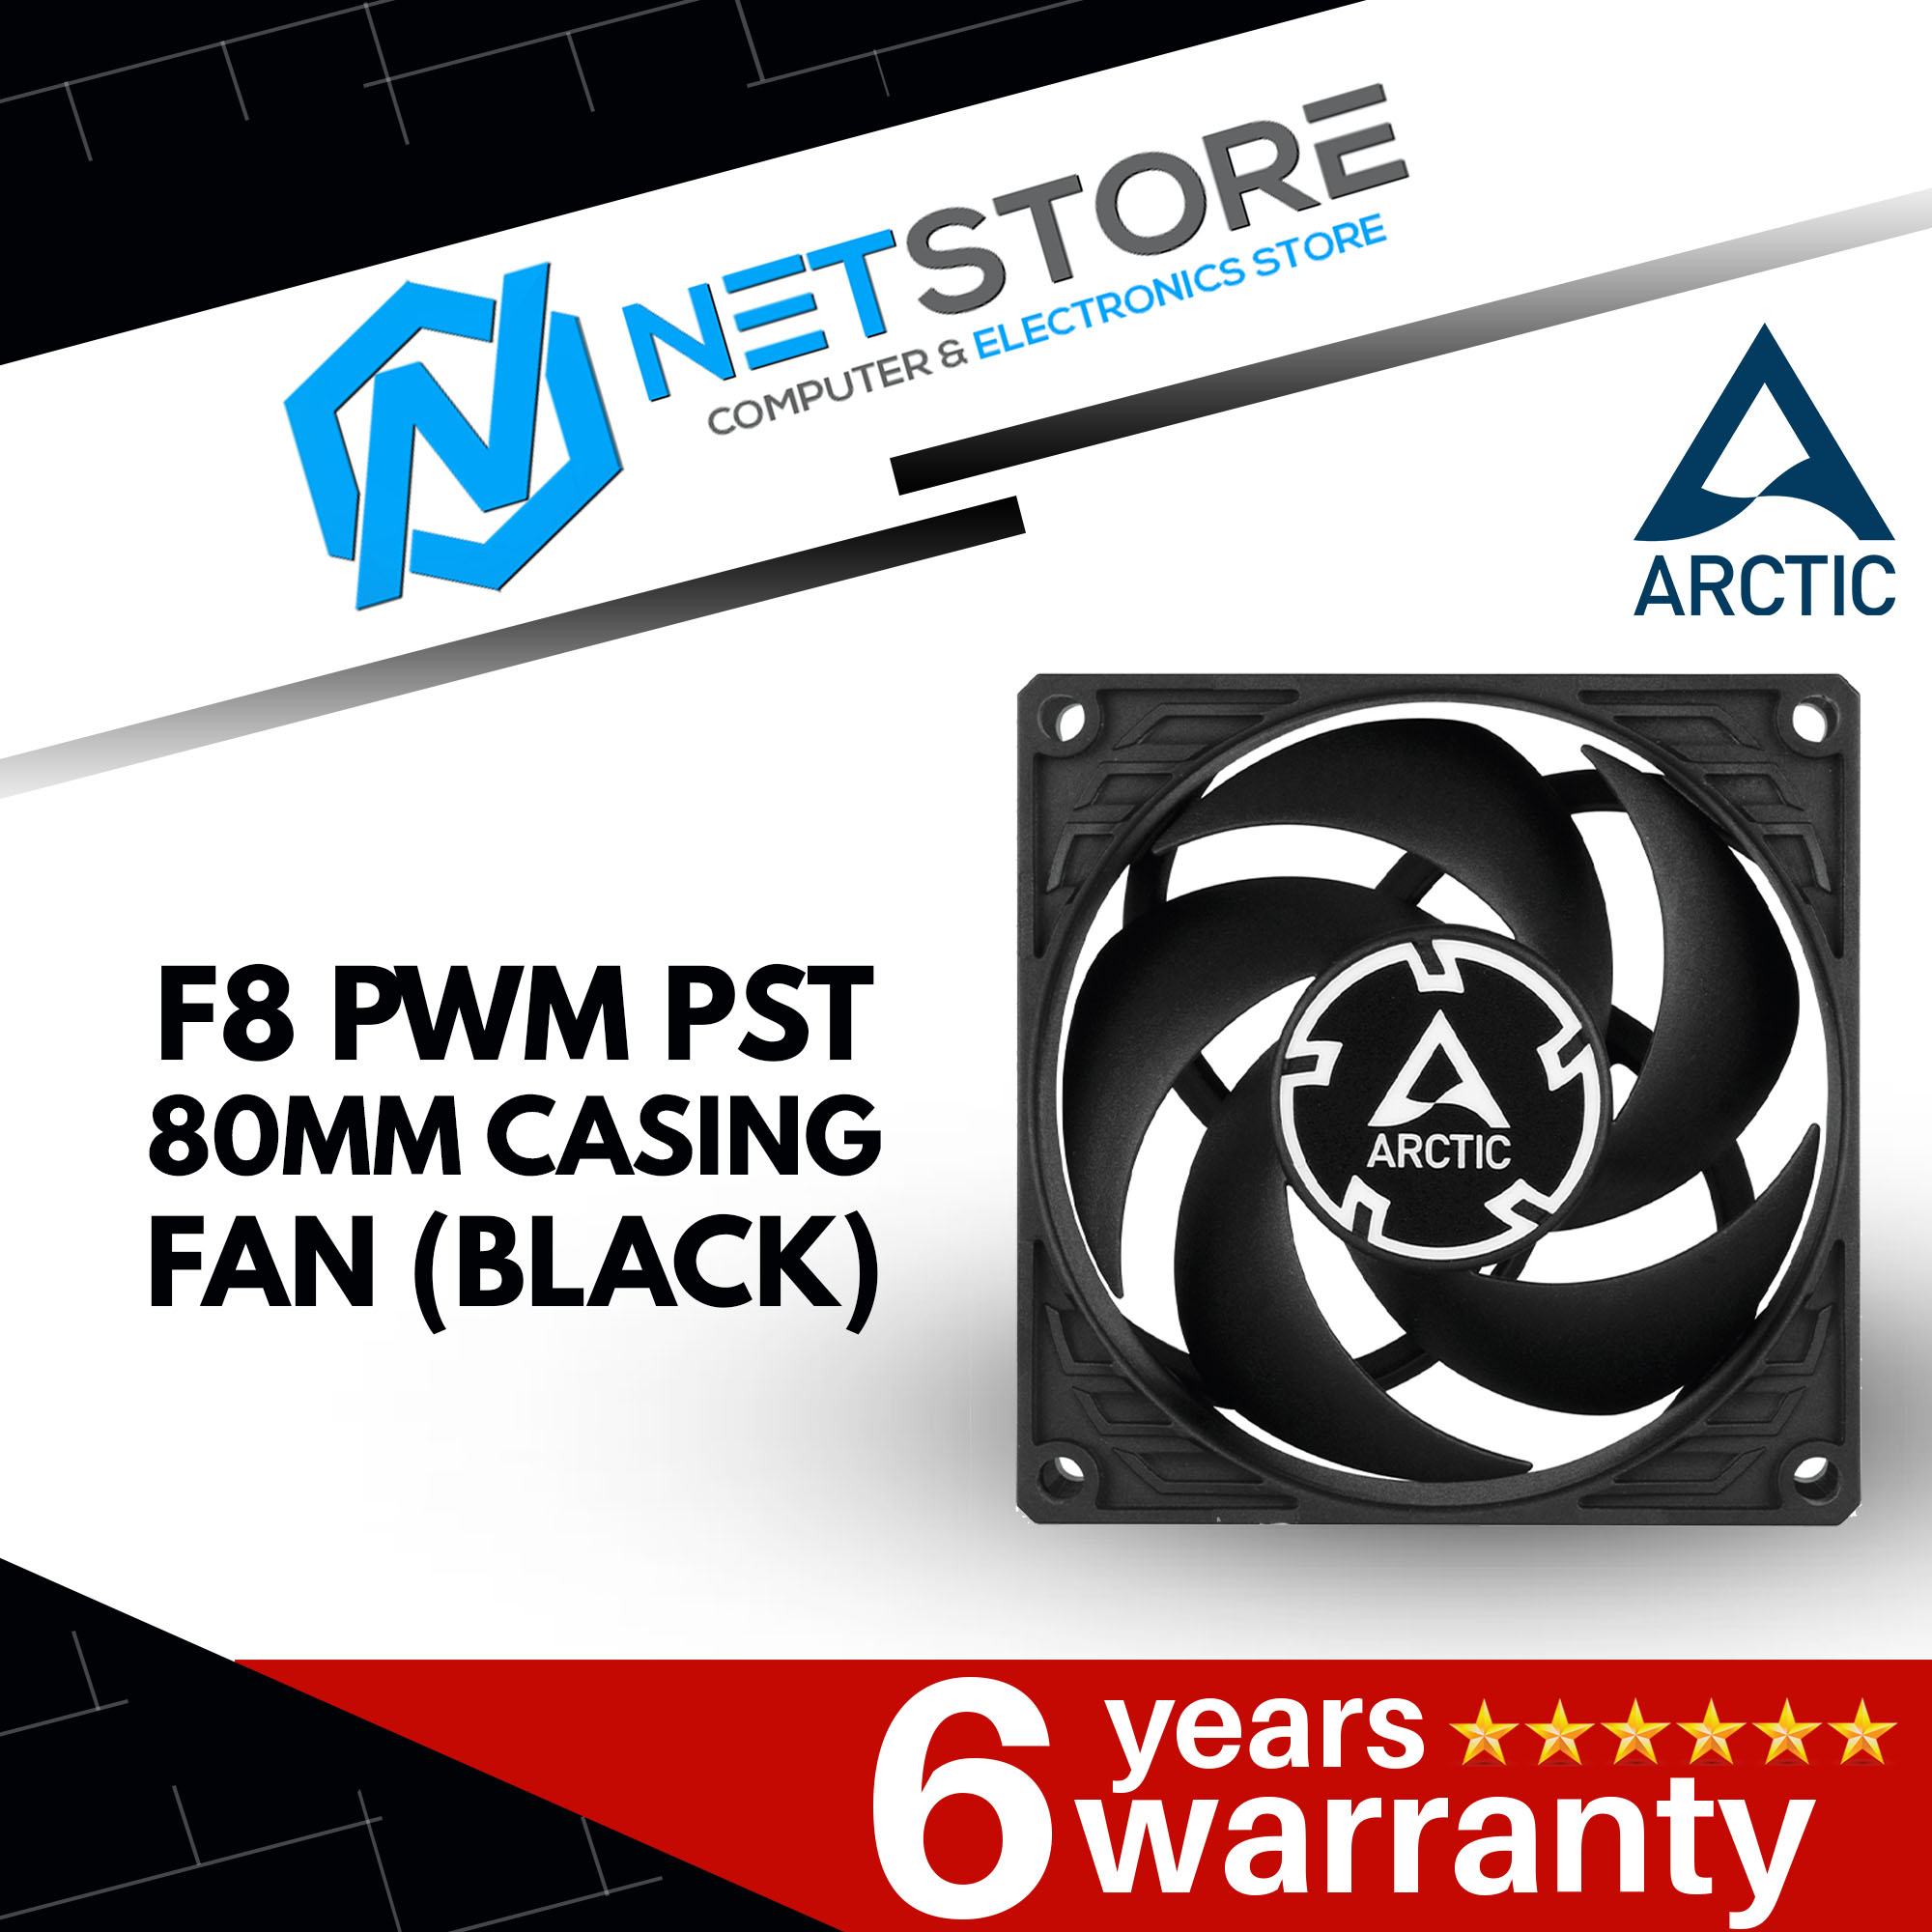 ARCTIC F8 PWM PST 80MM CASING FAN (BLACK) - ACFAN00150A